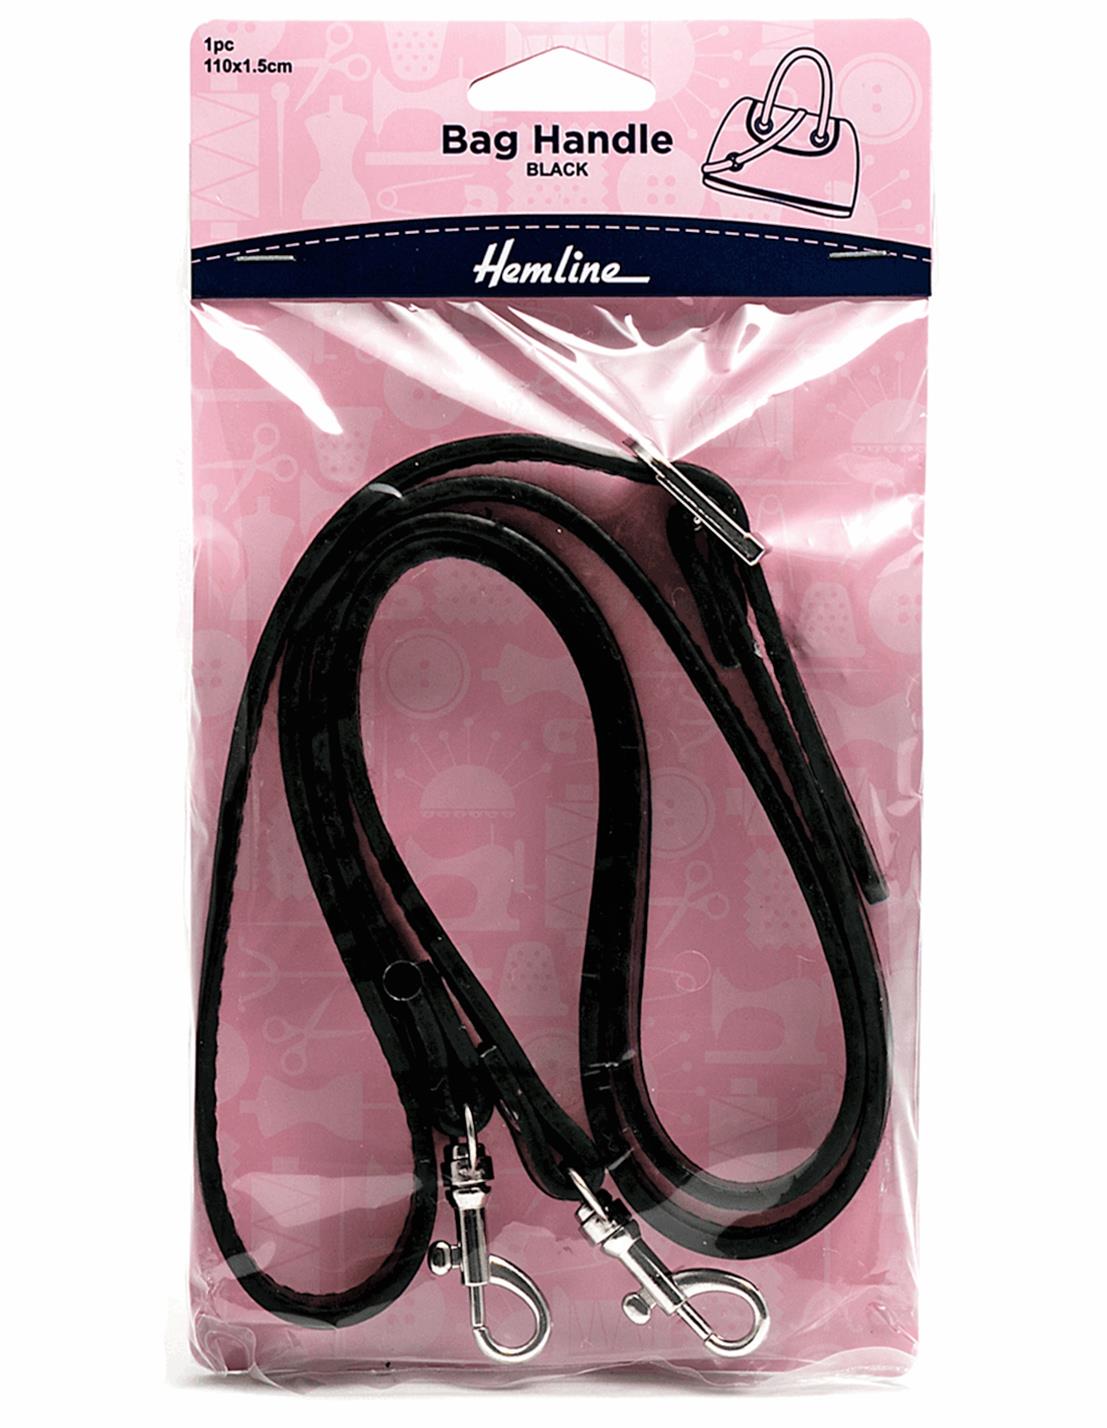 Hemline black leather effect bag handles (H4512.BK) - 110cm